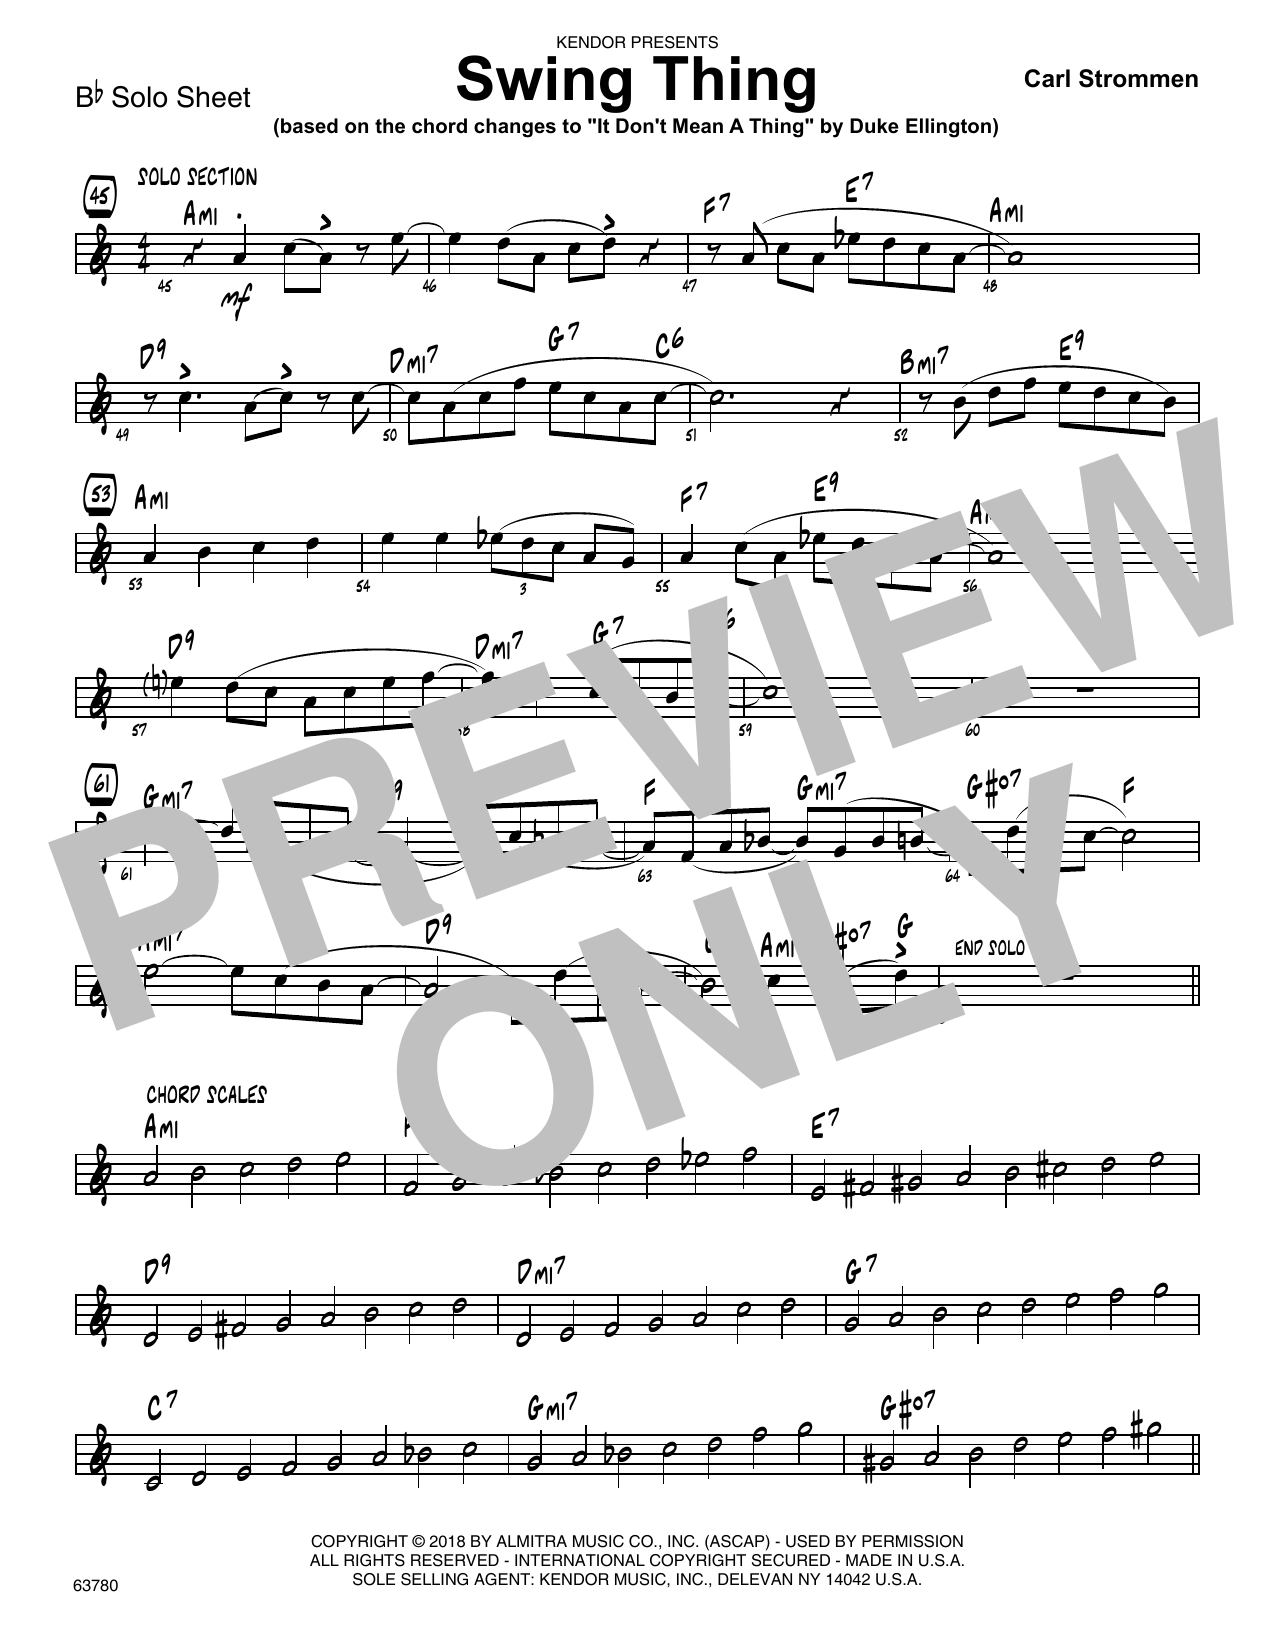 Download Carl Strommen Swing Thing - Bb Solo Sheet Sheet Music